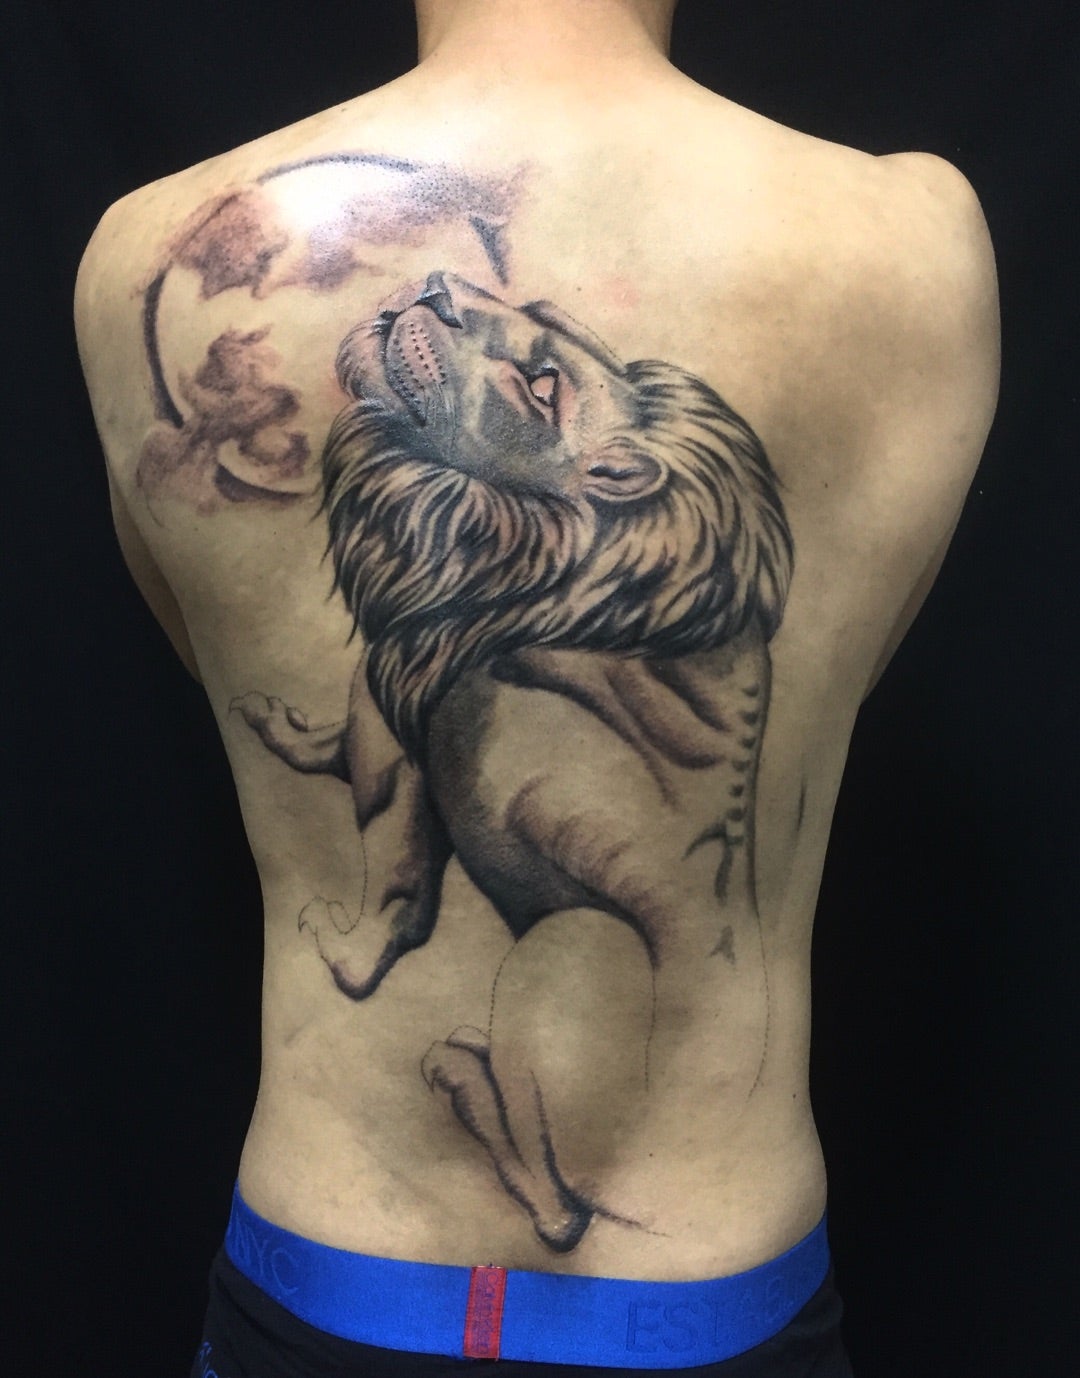 Tattoo ライオンと月 神戸三宮のタトゥースタジオ 刺青彫師 彫いちの作品集